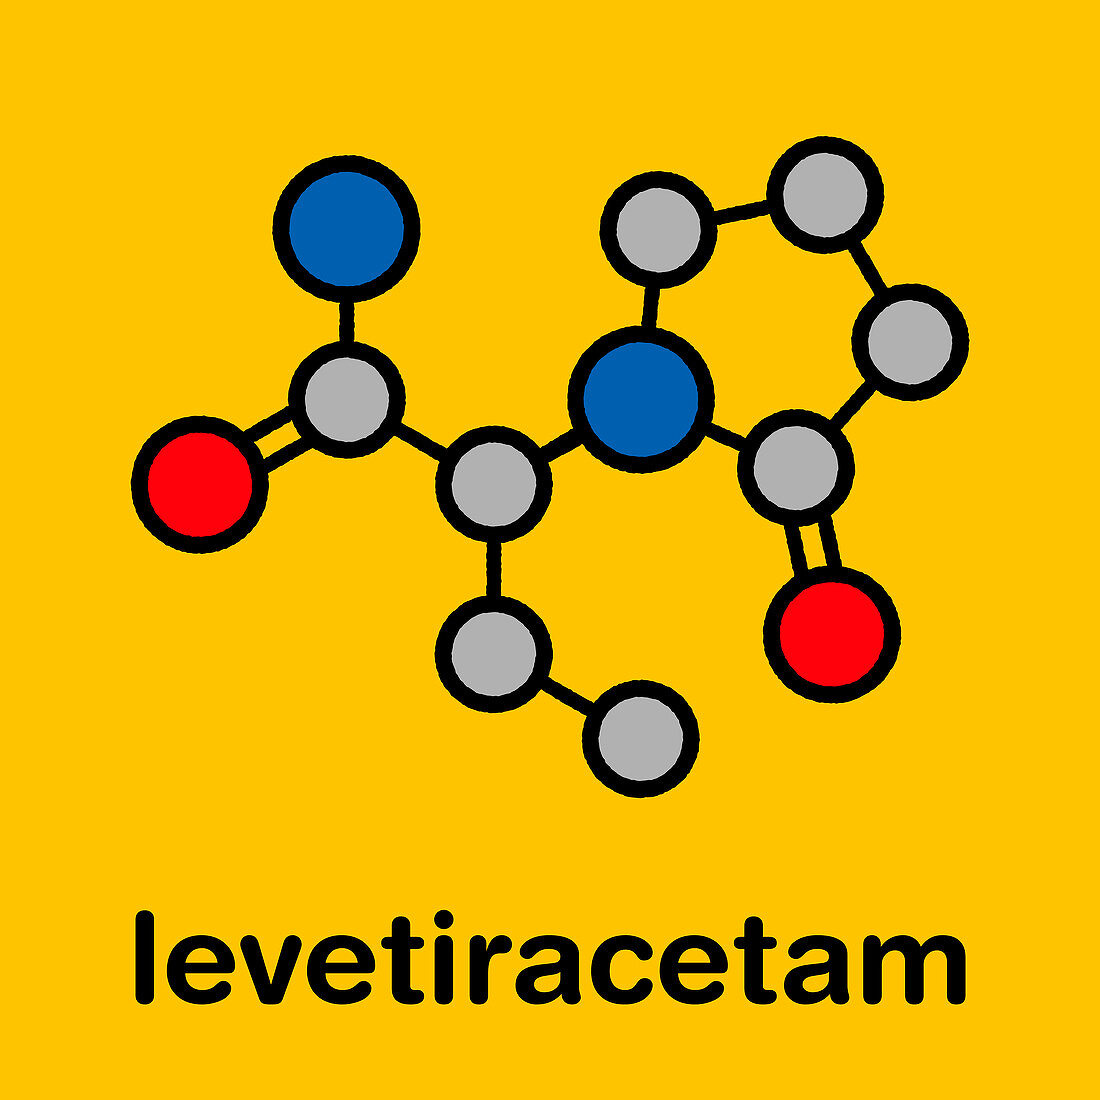 Levetiracetam epilepsy drug, molecular model